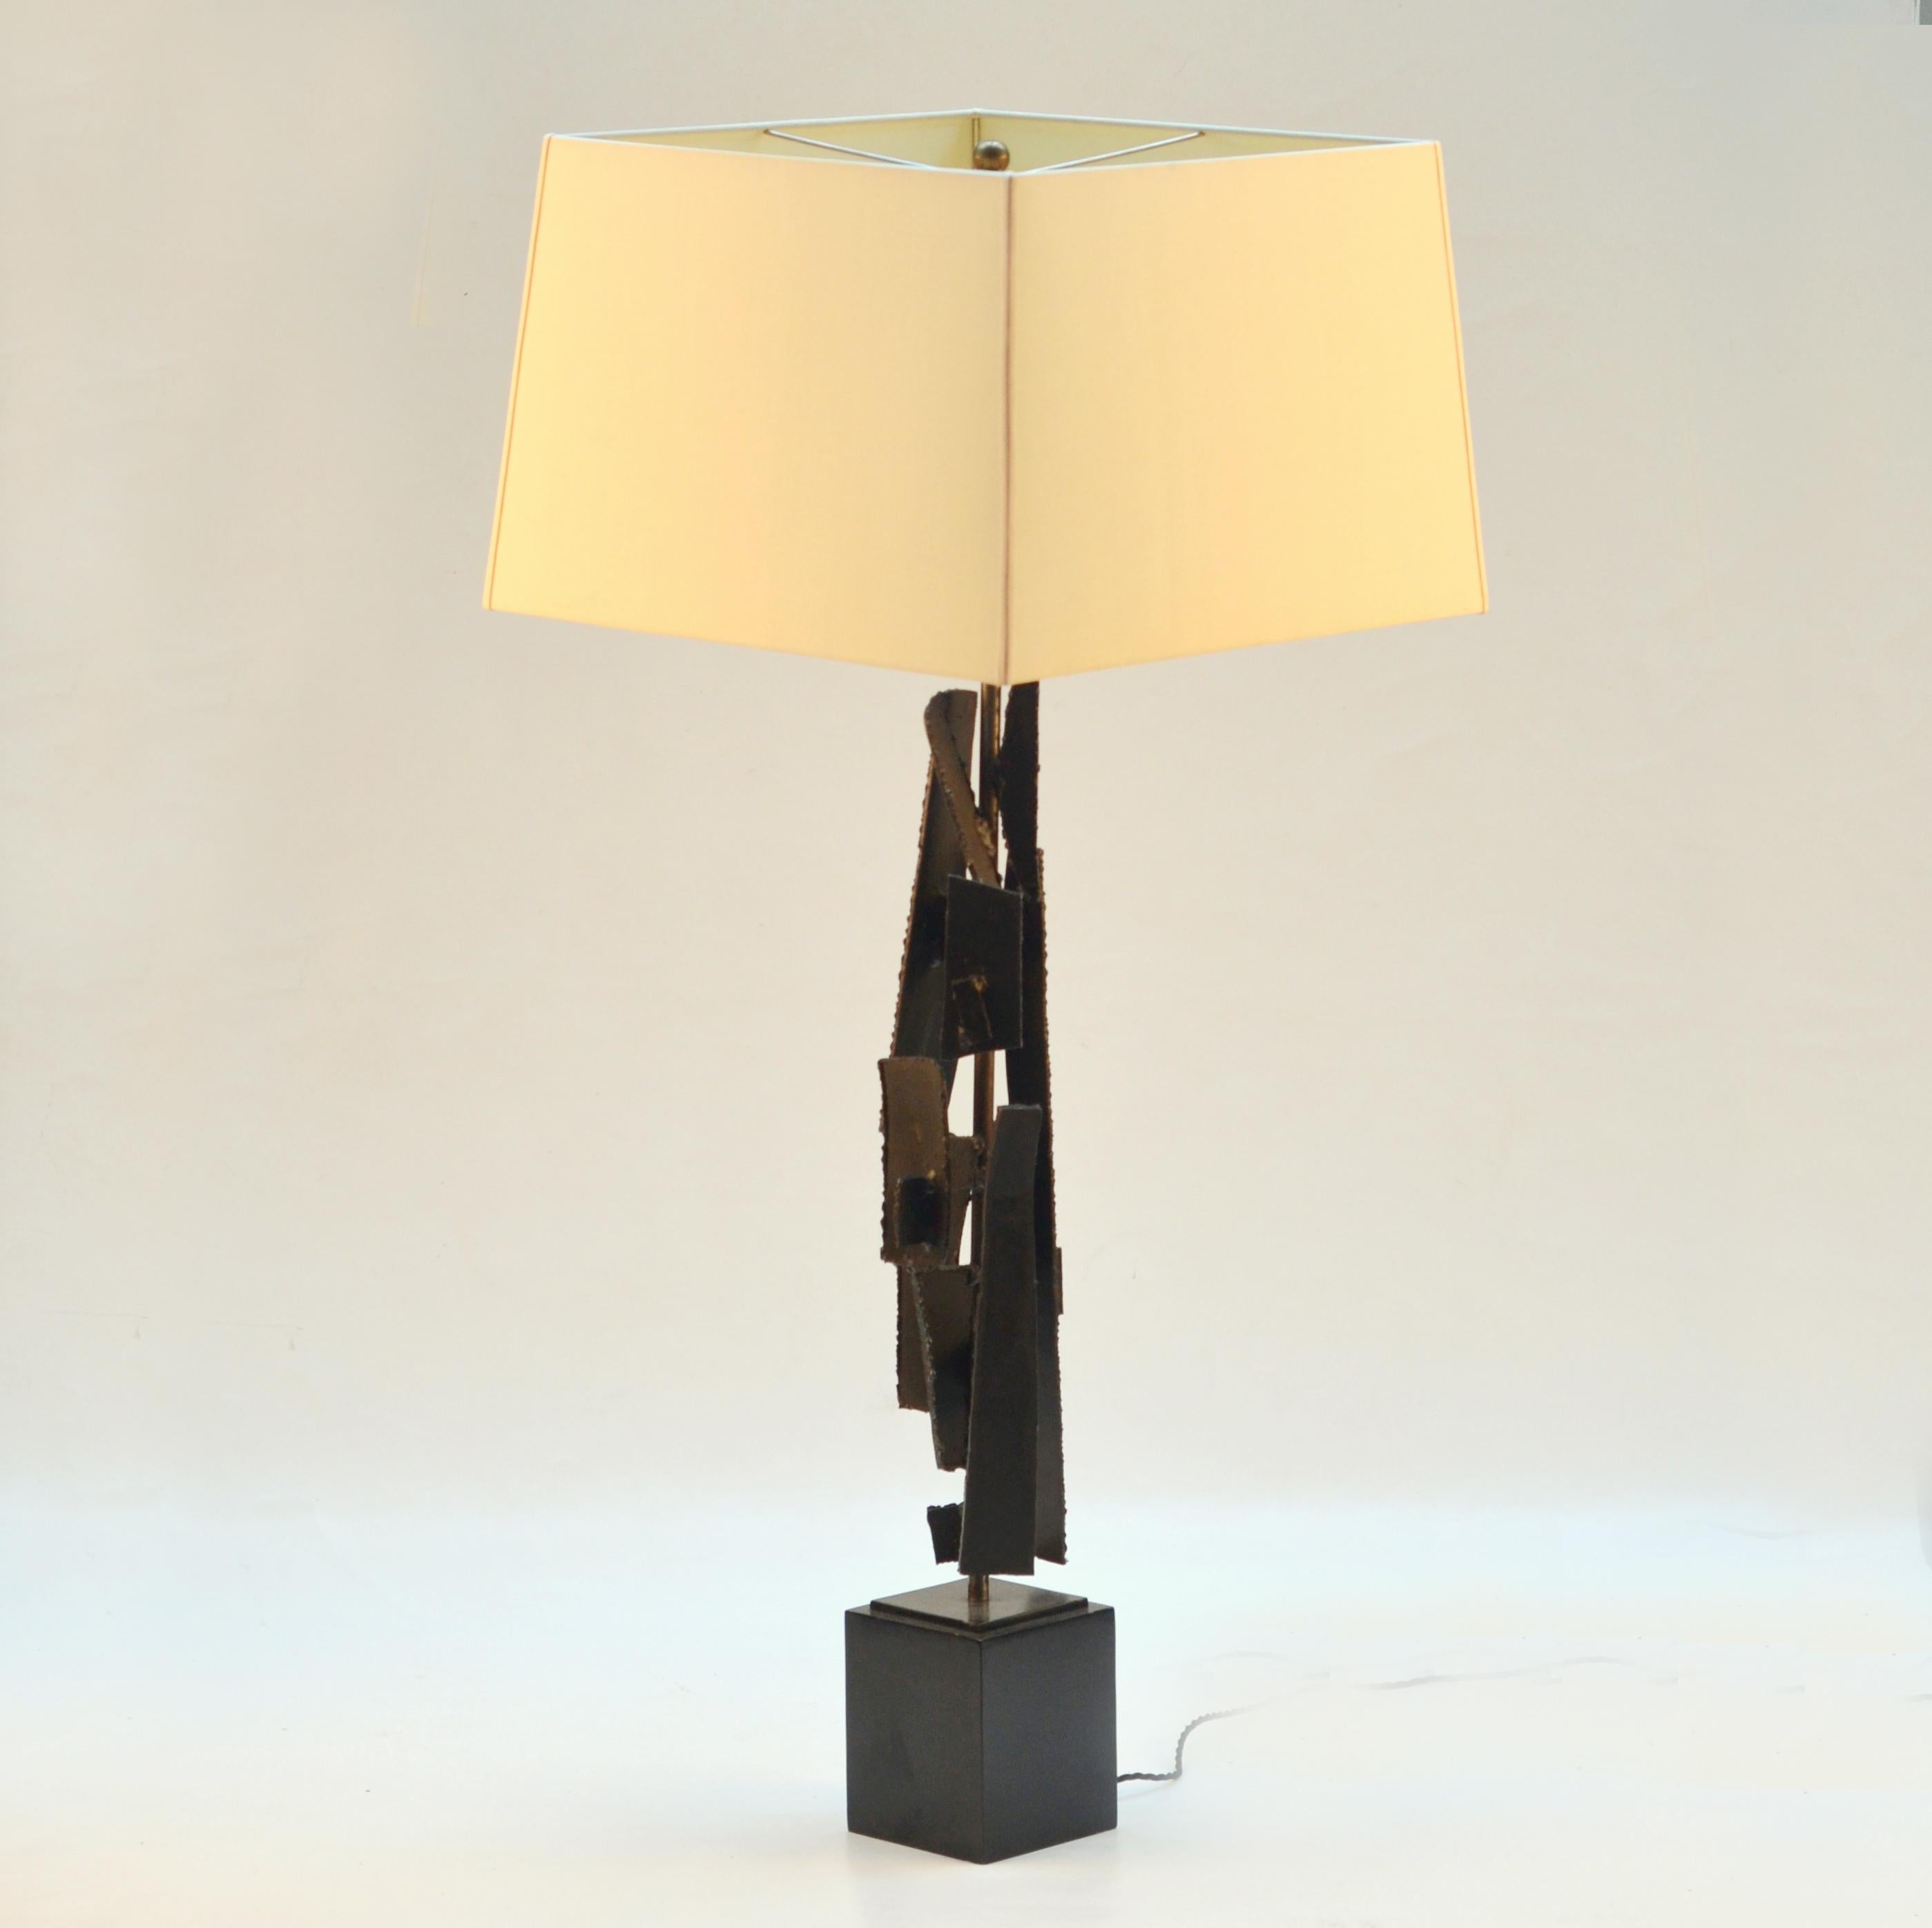 Cut Steel Pair of Table Lamps by Artist Harry Balmer in Oxidized Steel